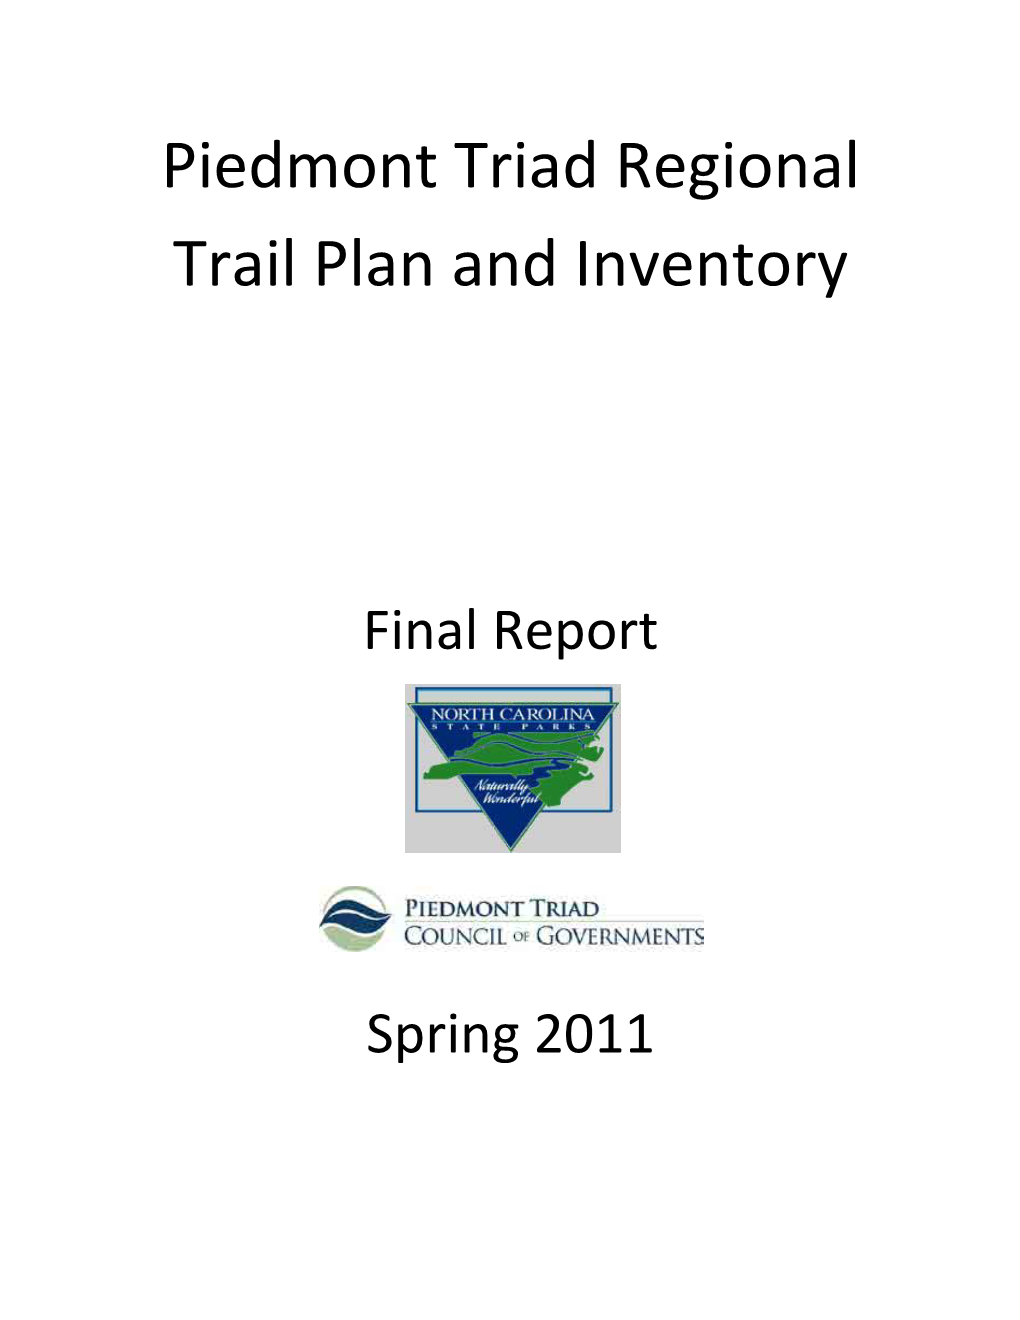 Piedmont Triad Regional Trail Plan and Inventory